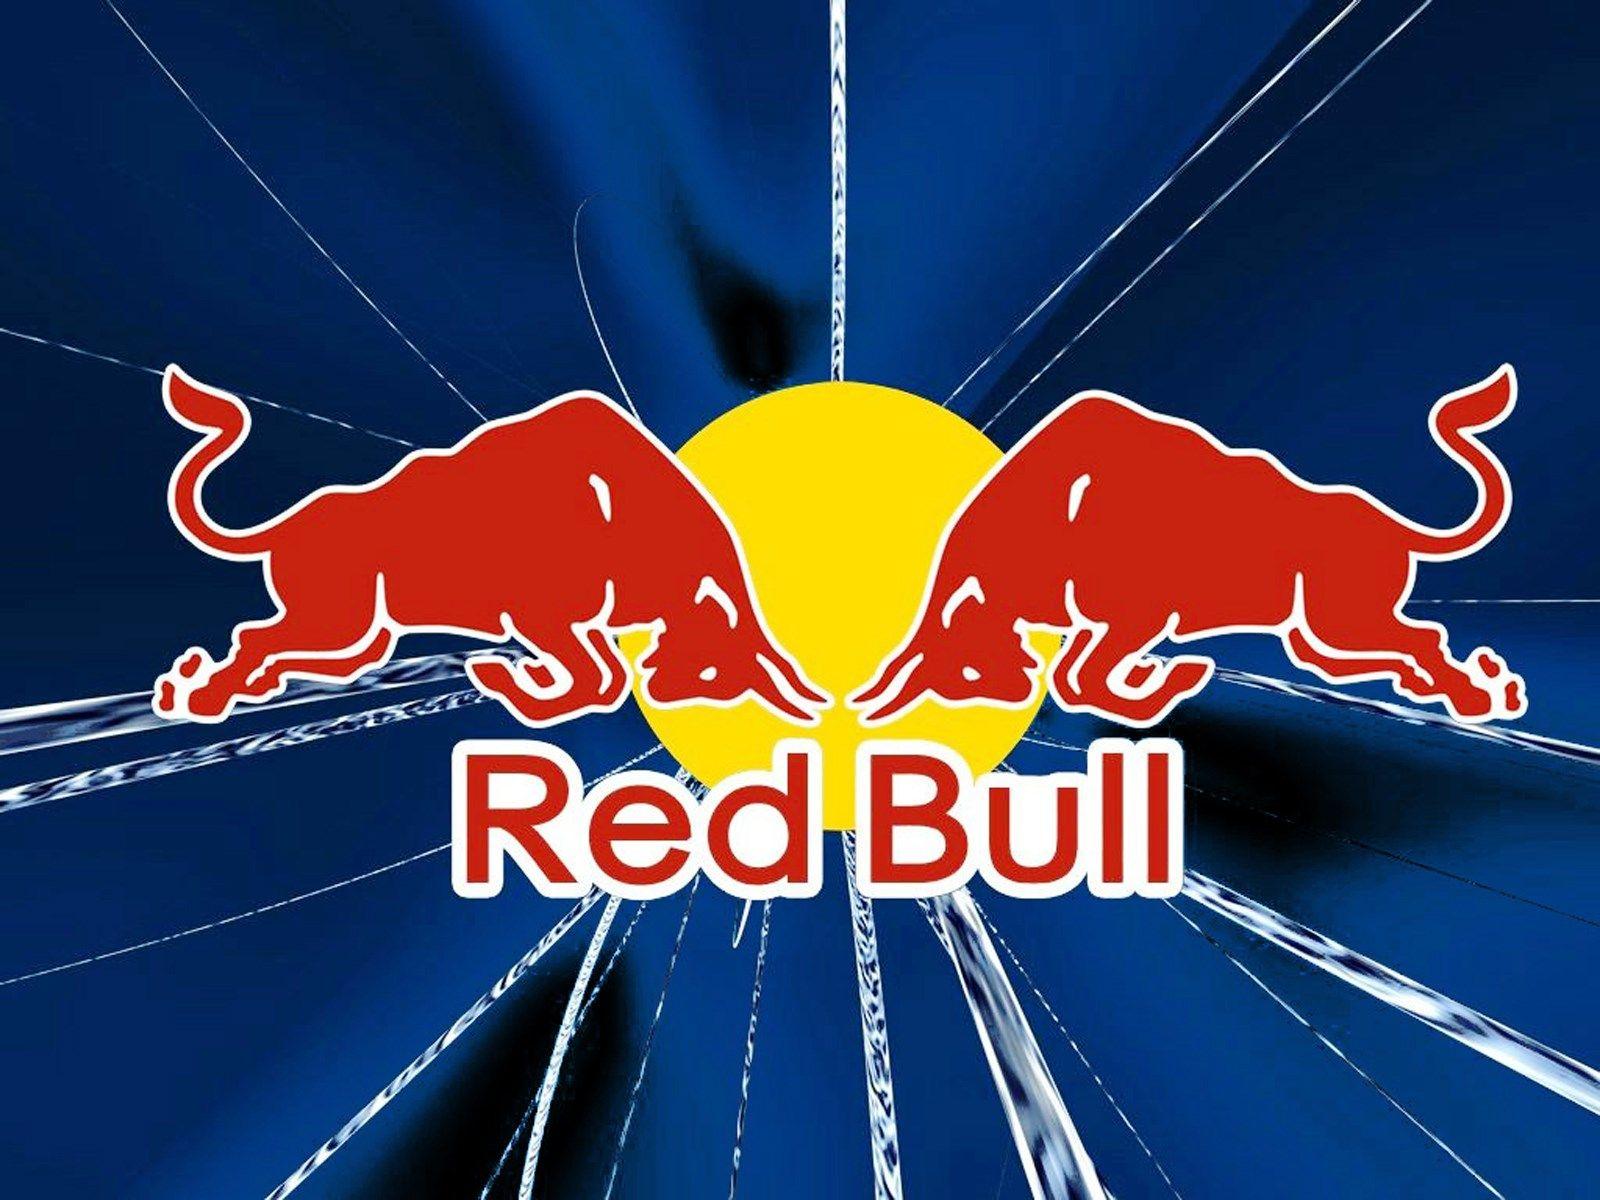 hd red bull logo wallpaper